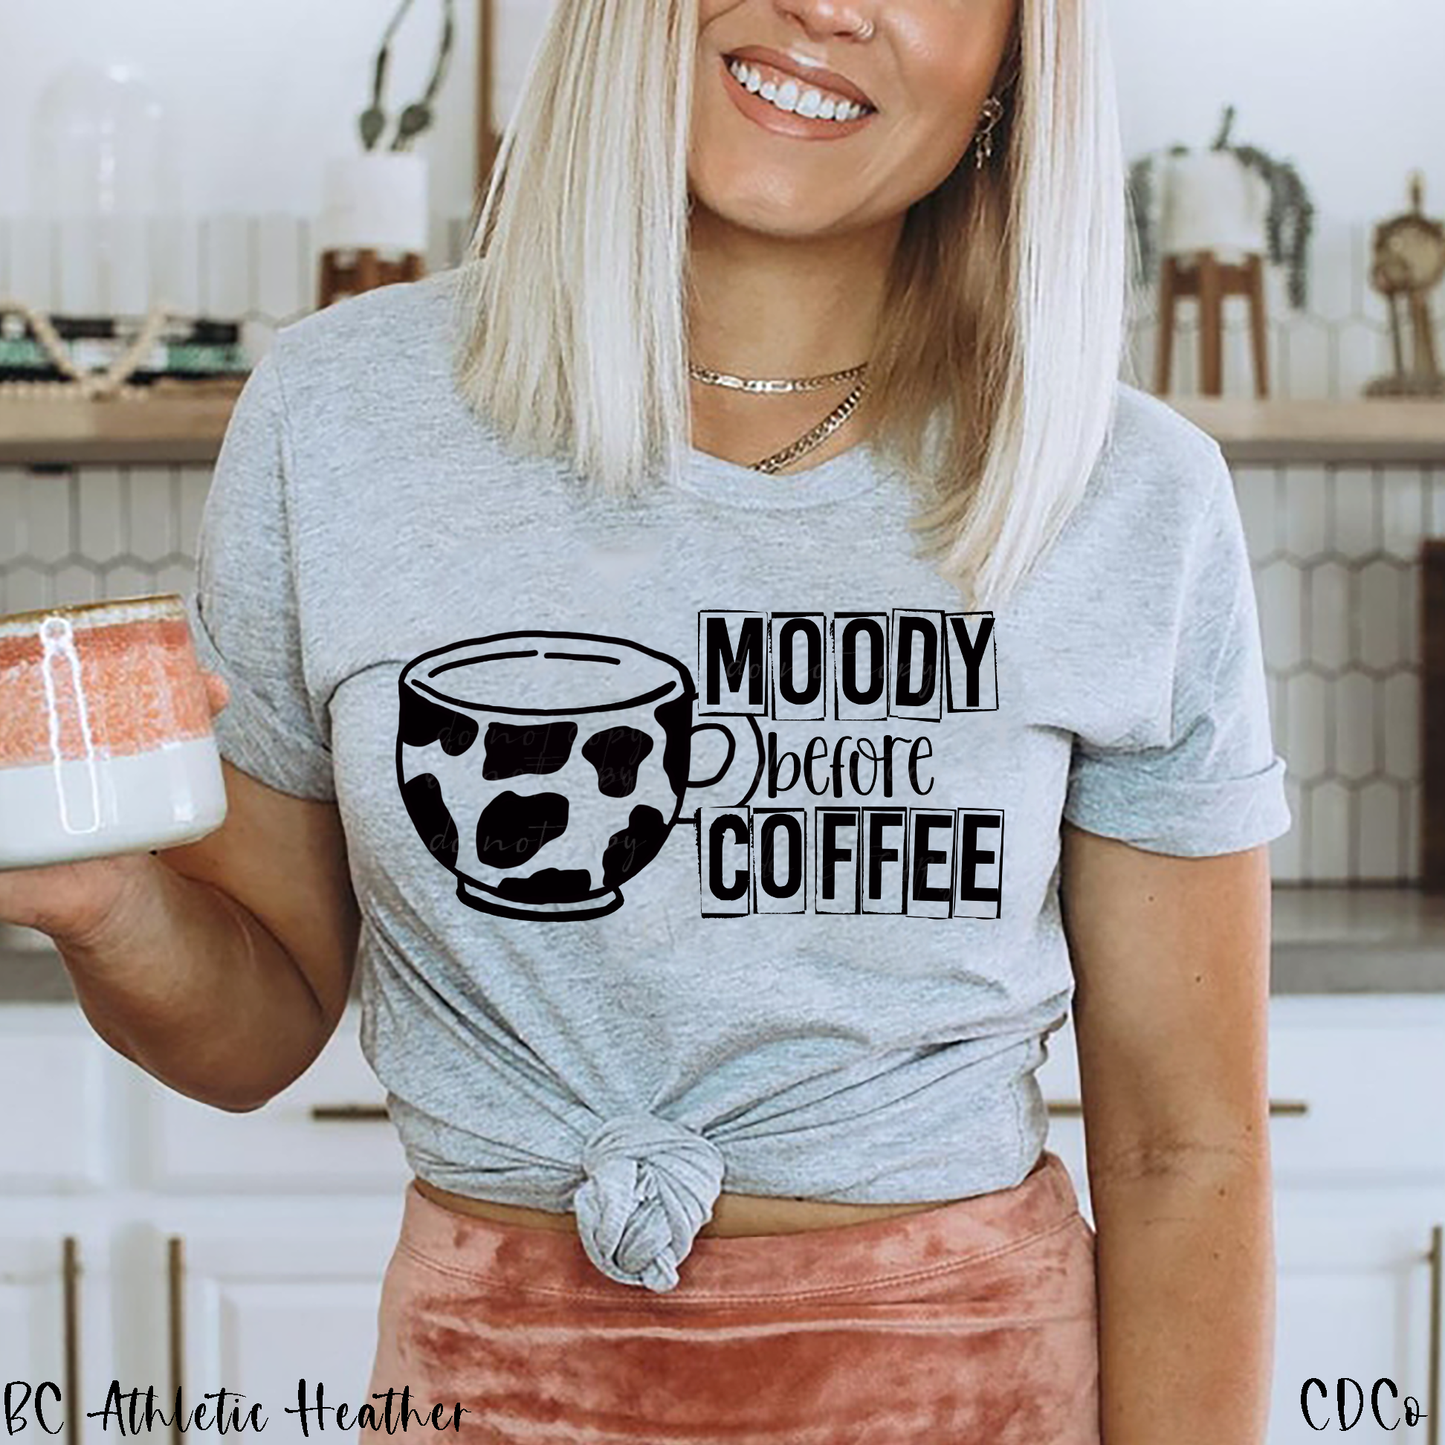 Moody Before Coffee (325°)